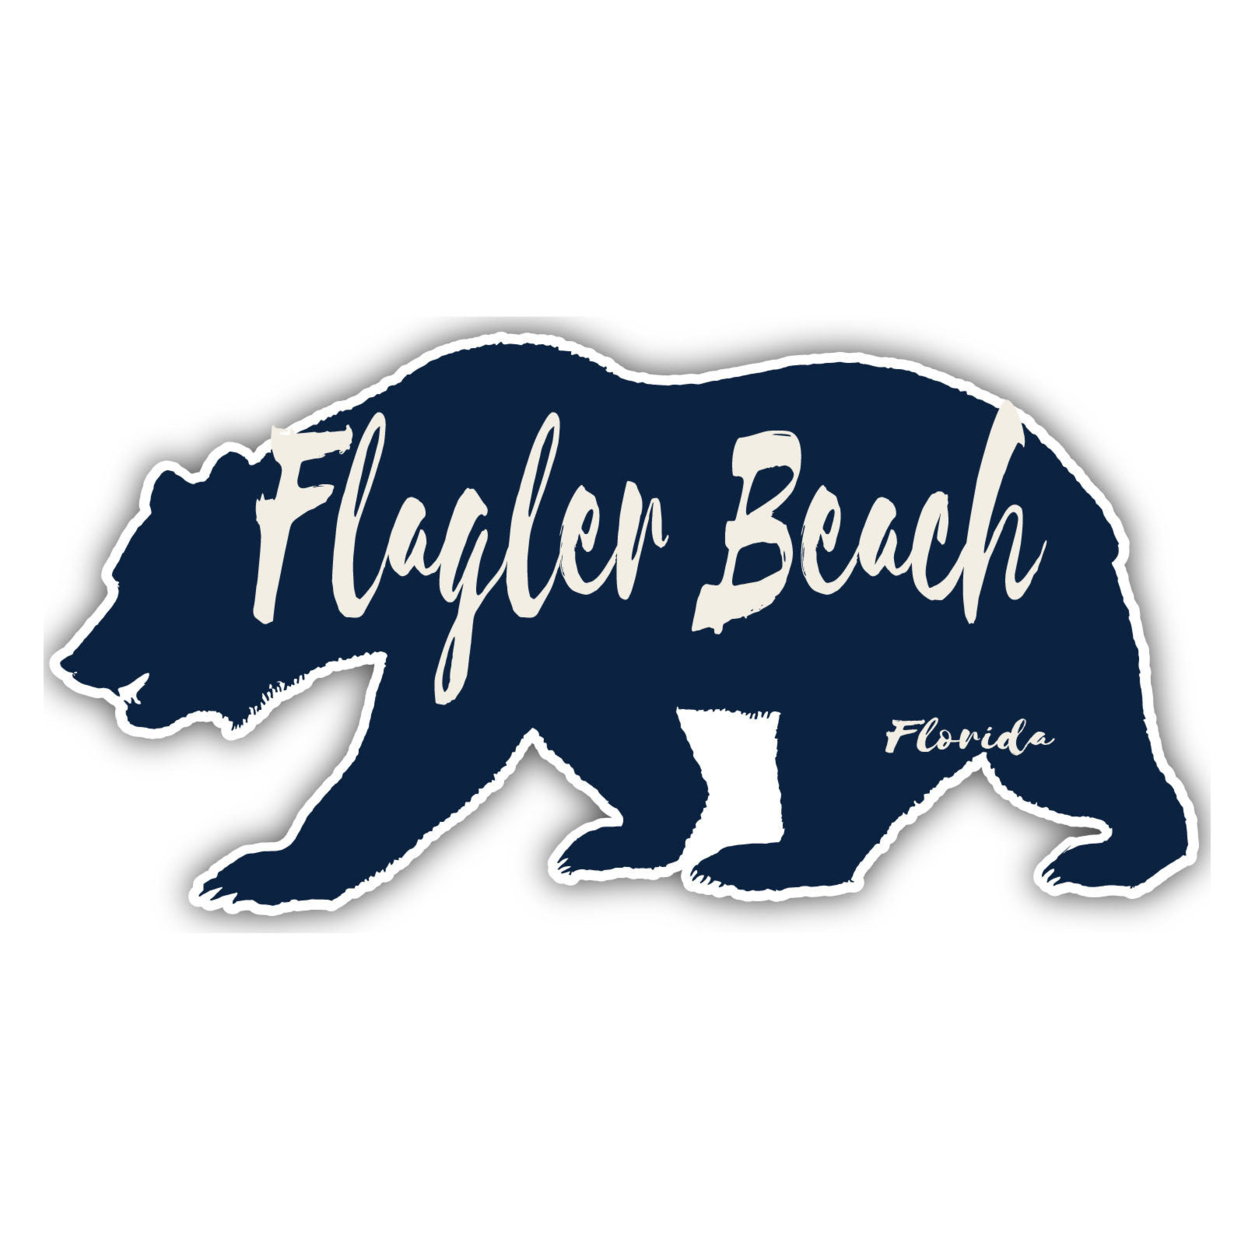 Flagler Beach Florida Souvenir Decorative Stickers (Choose Theme And Size) - 4-Pack, 2-Inch, Bear